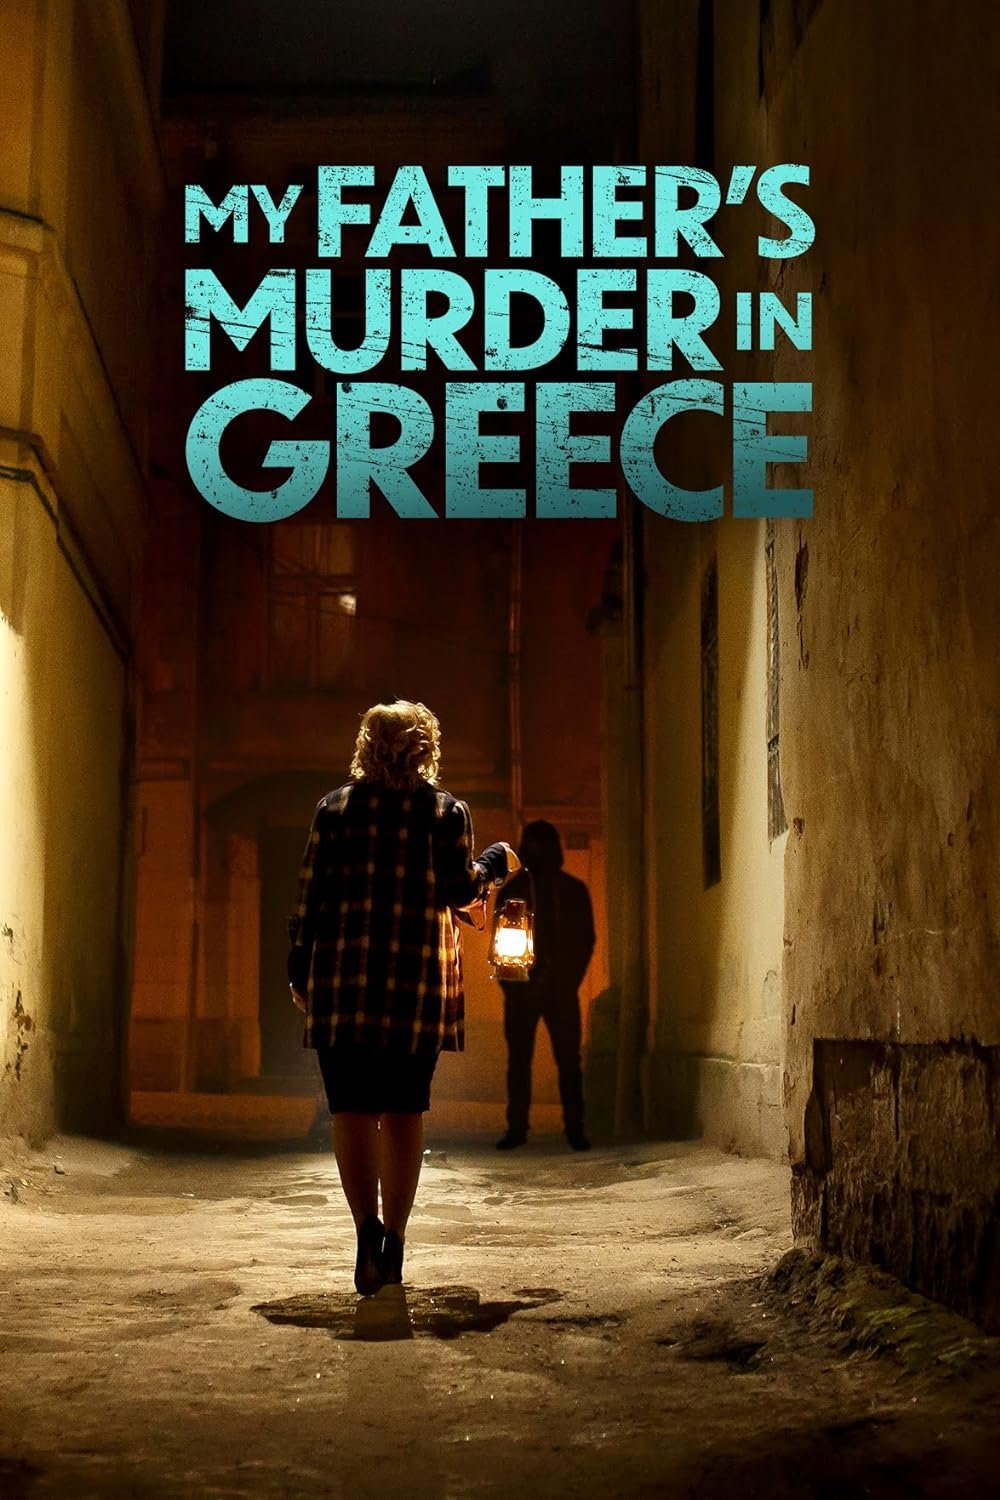 My Father's Murder in Greece - VJ Junior